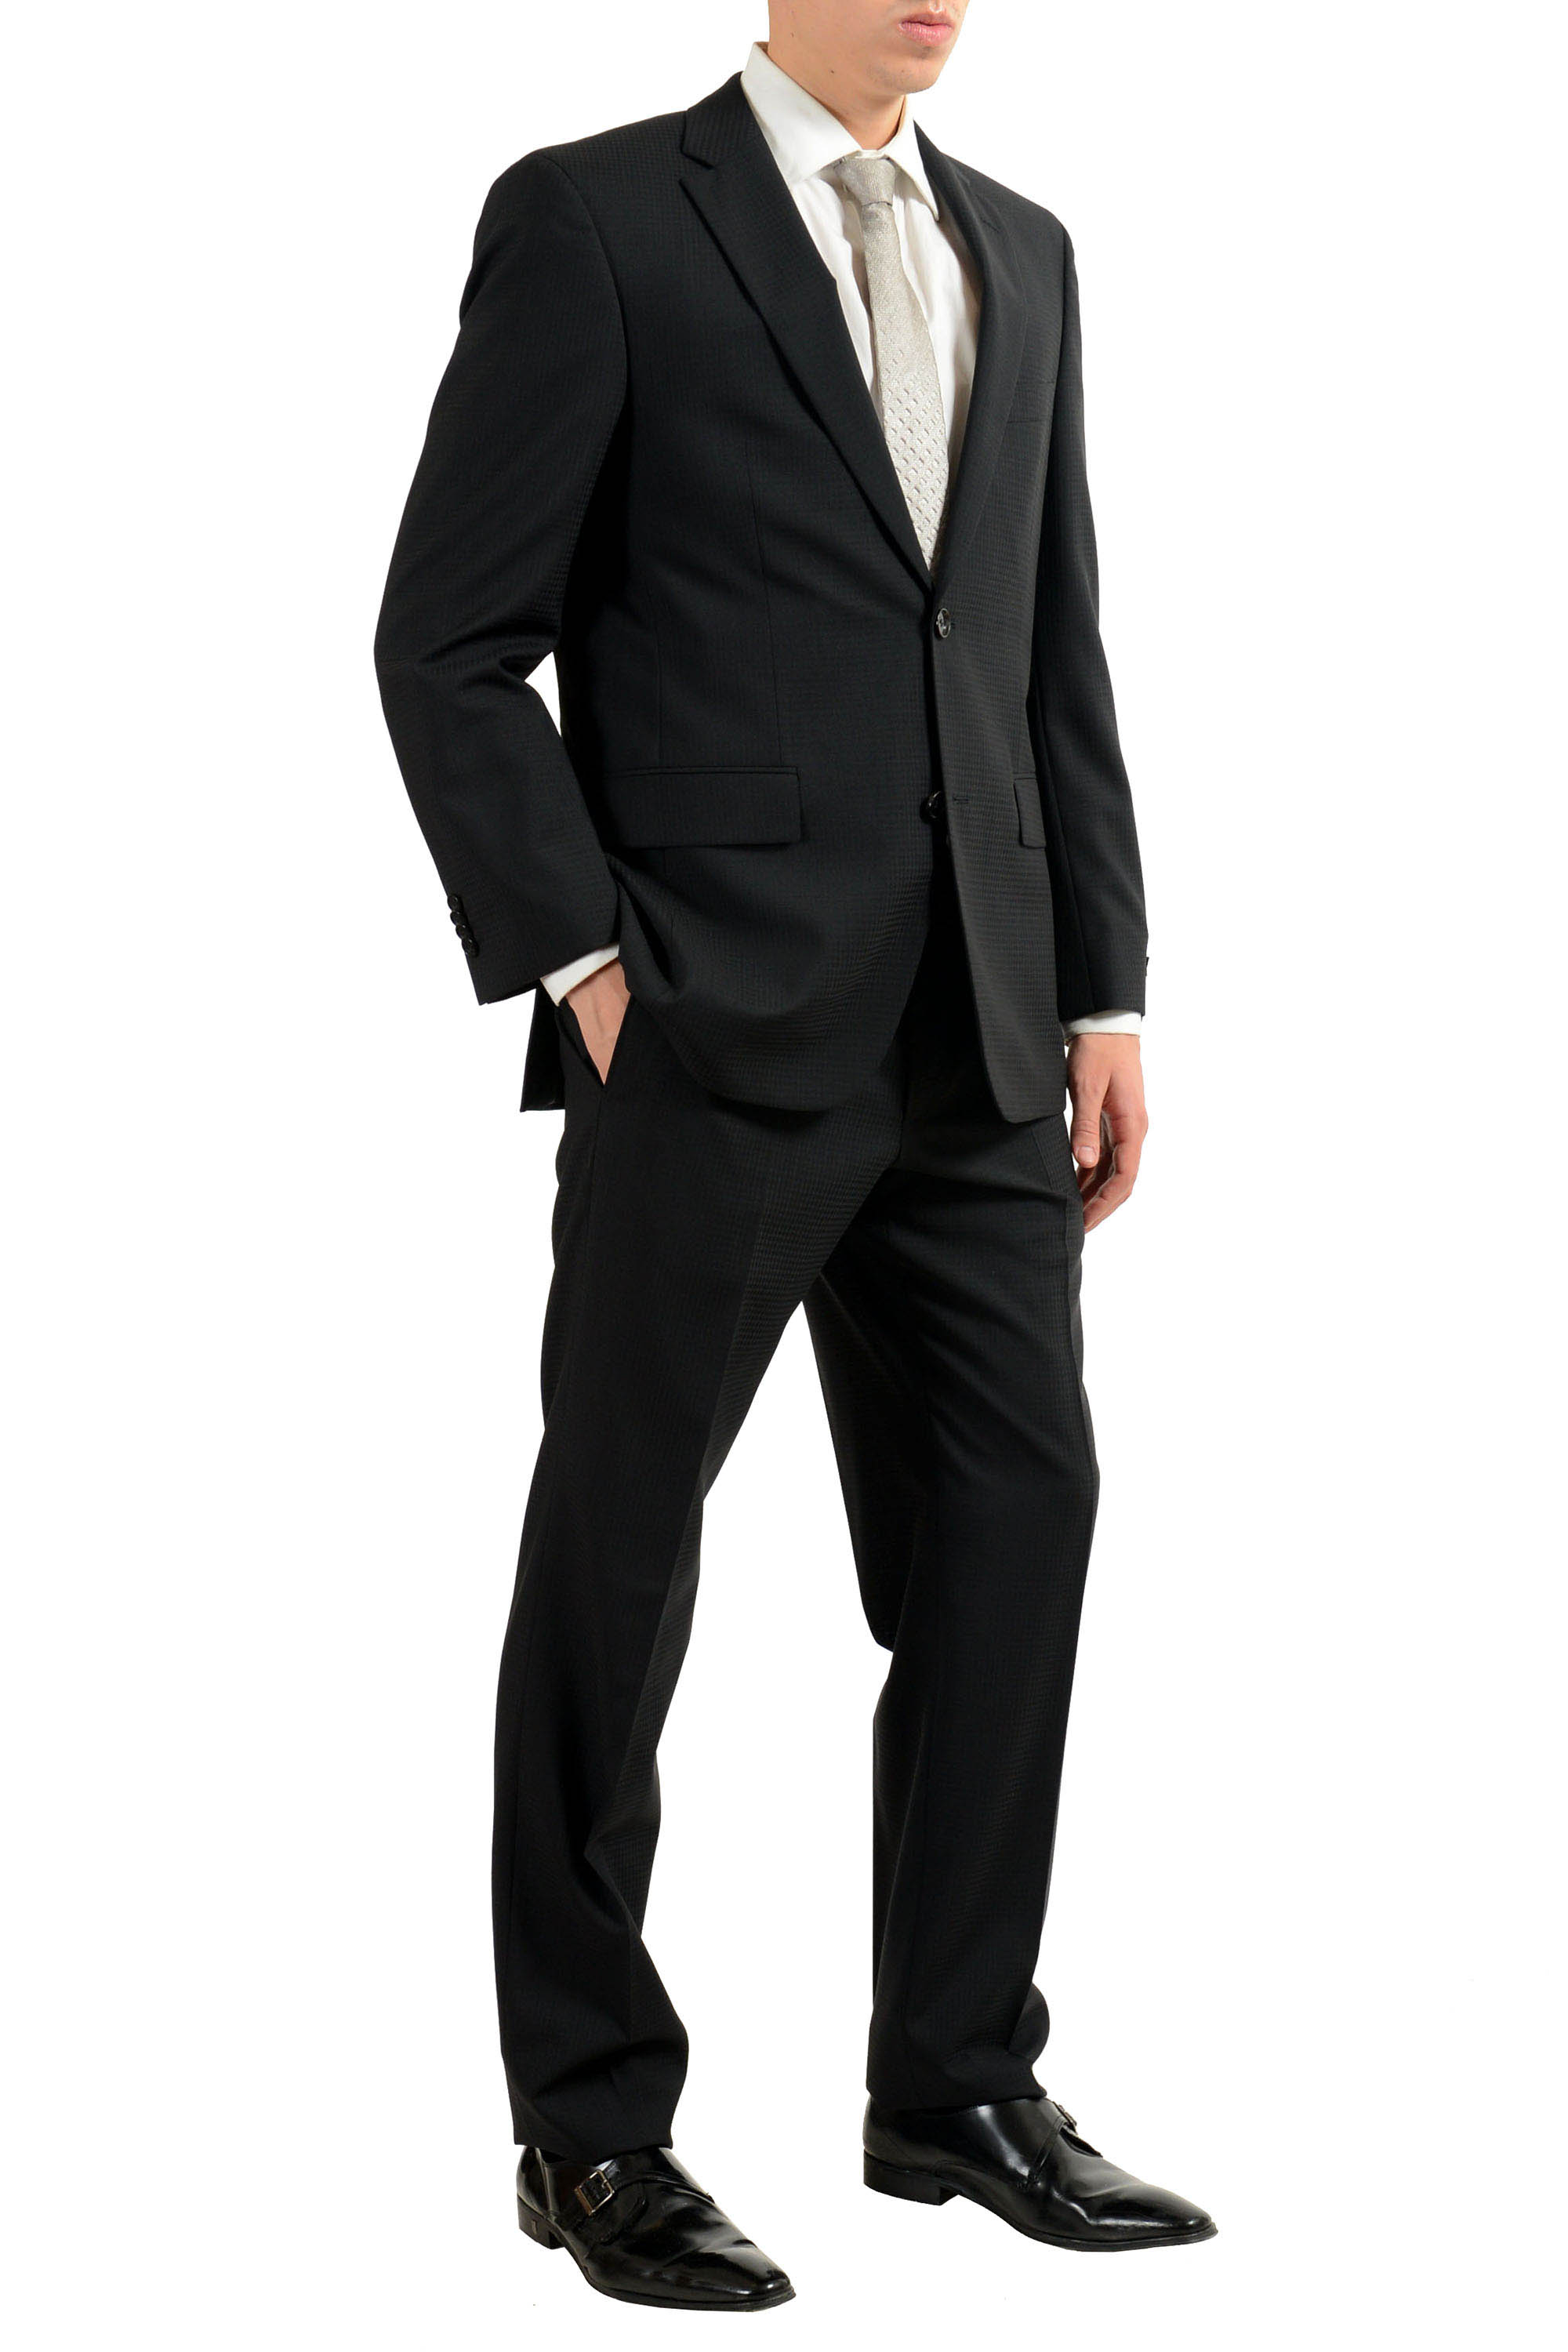 Hugo Boss "Paolini1/Movio1US" Men's 100% Wool Black Two Button Suit 